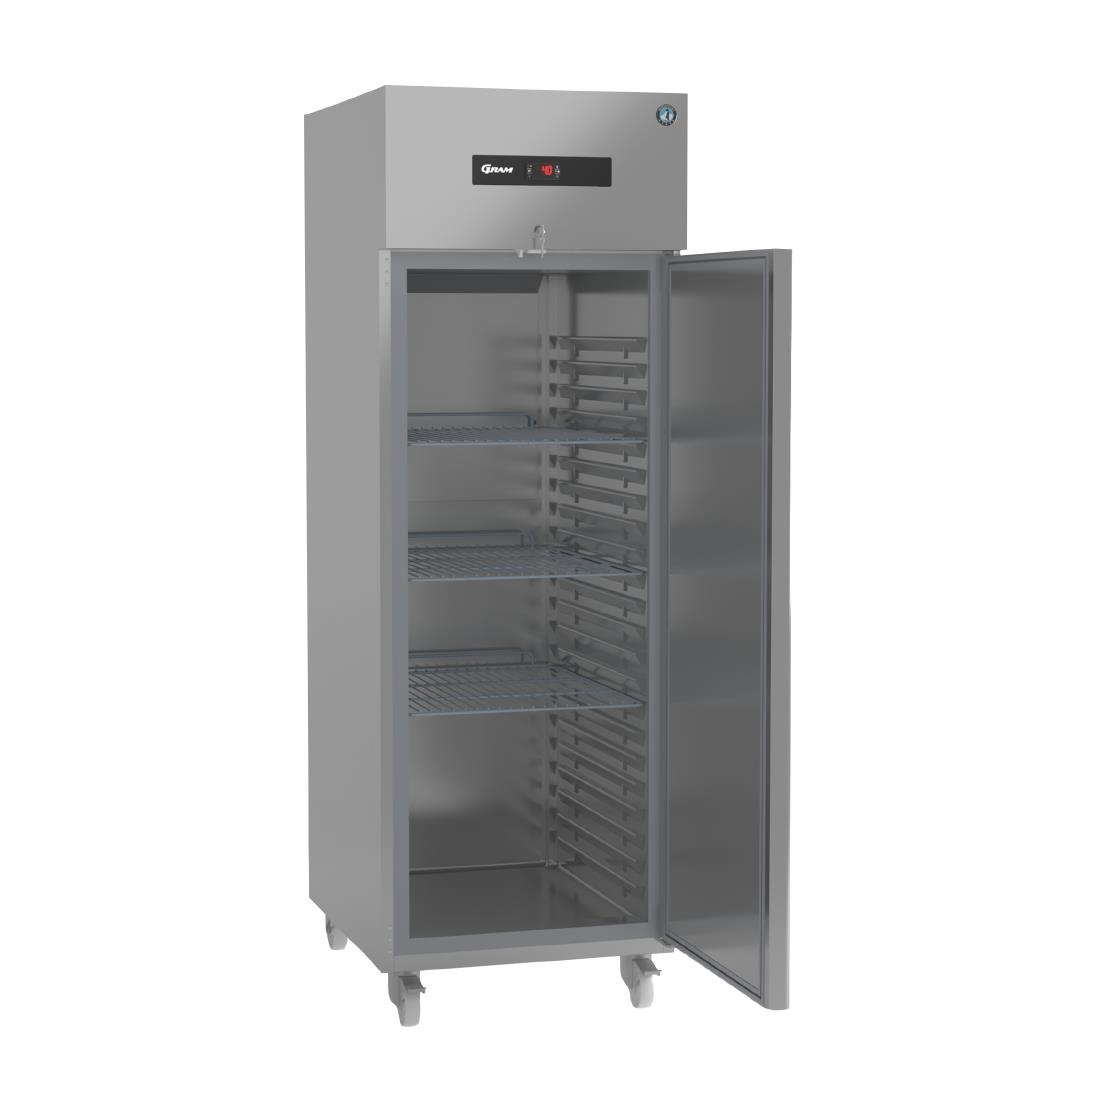 CU265 Hoshizaki Advance Single Door Refrigerator K70-4 C DL U JD Catering Equipment Solutions Ltd